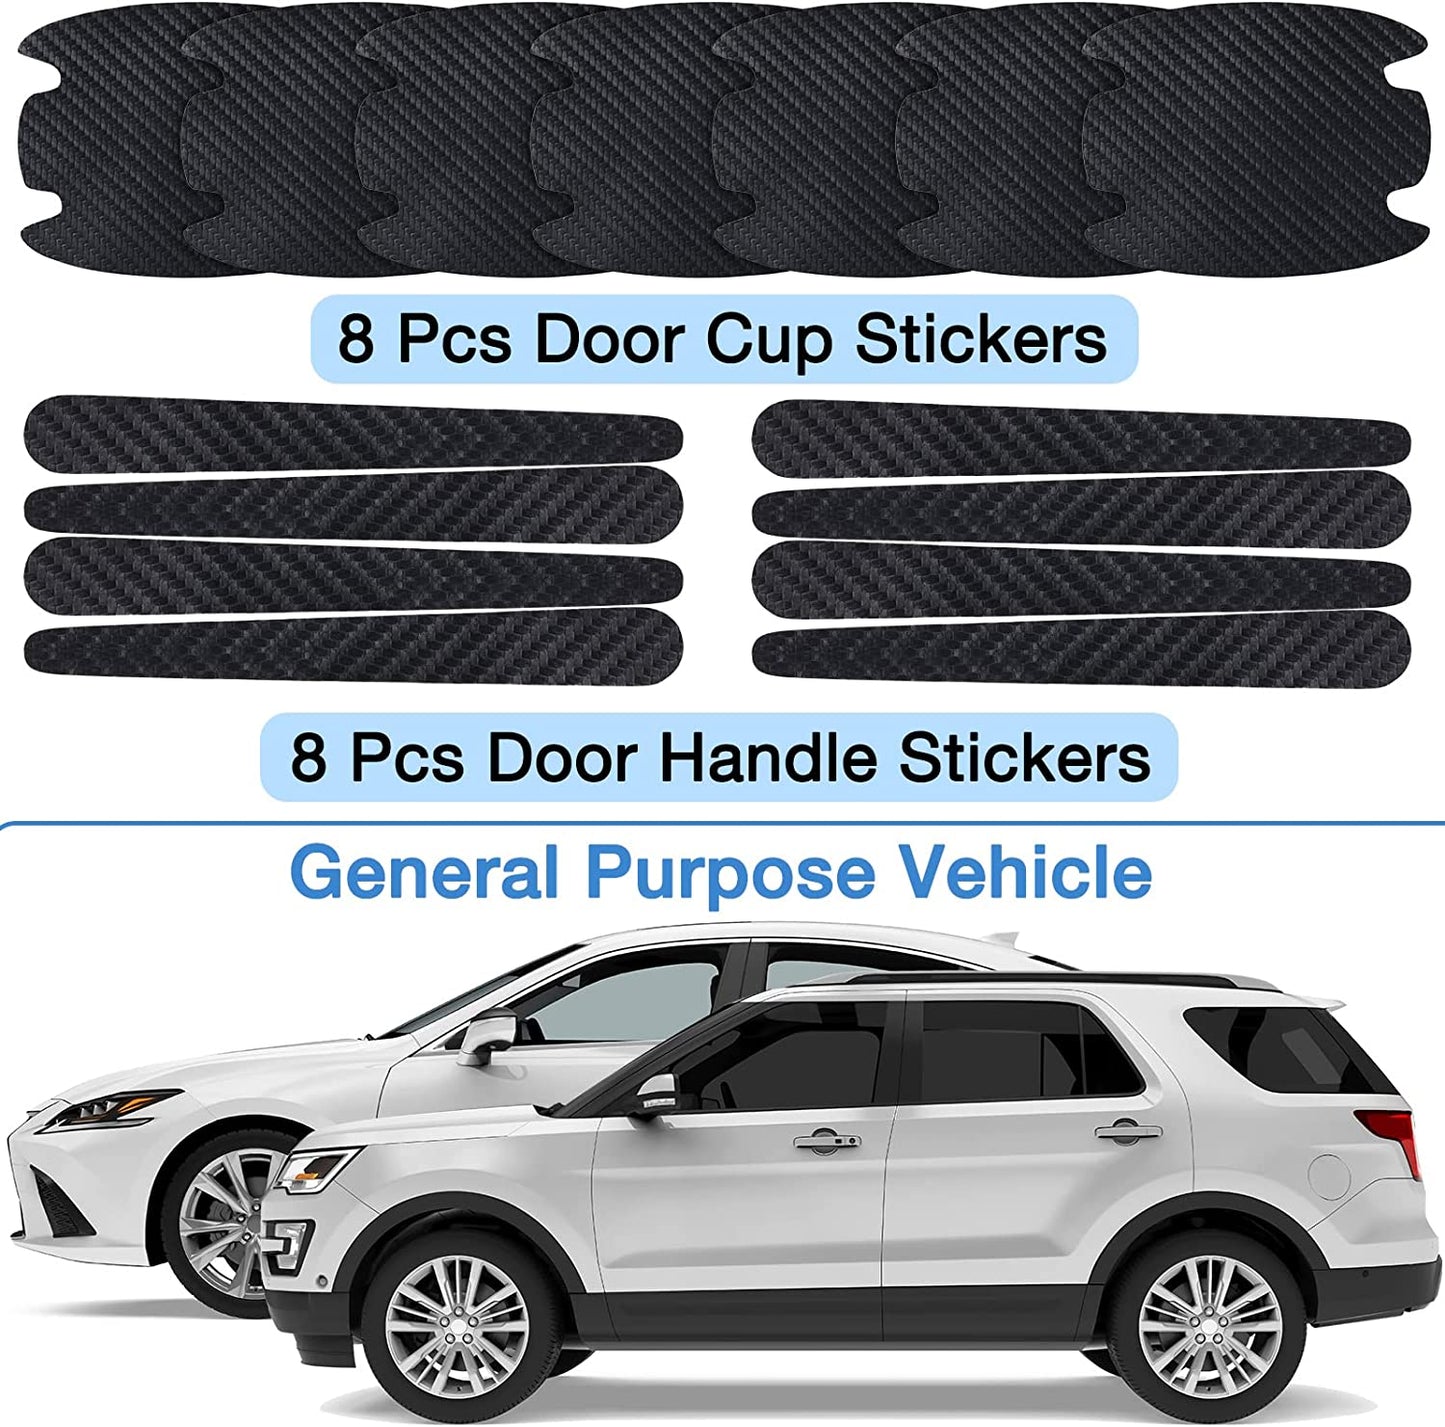 16 Pieces Car Door Handle Scratch Protector Carbon Fiber Car Door Handle Sticker Cover Scratches Protective Films Car Door Handle Cup Protector Films